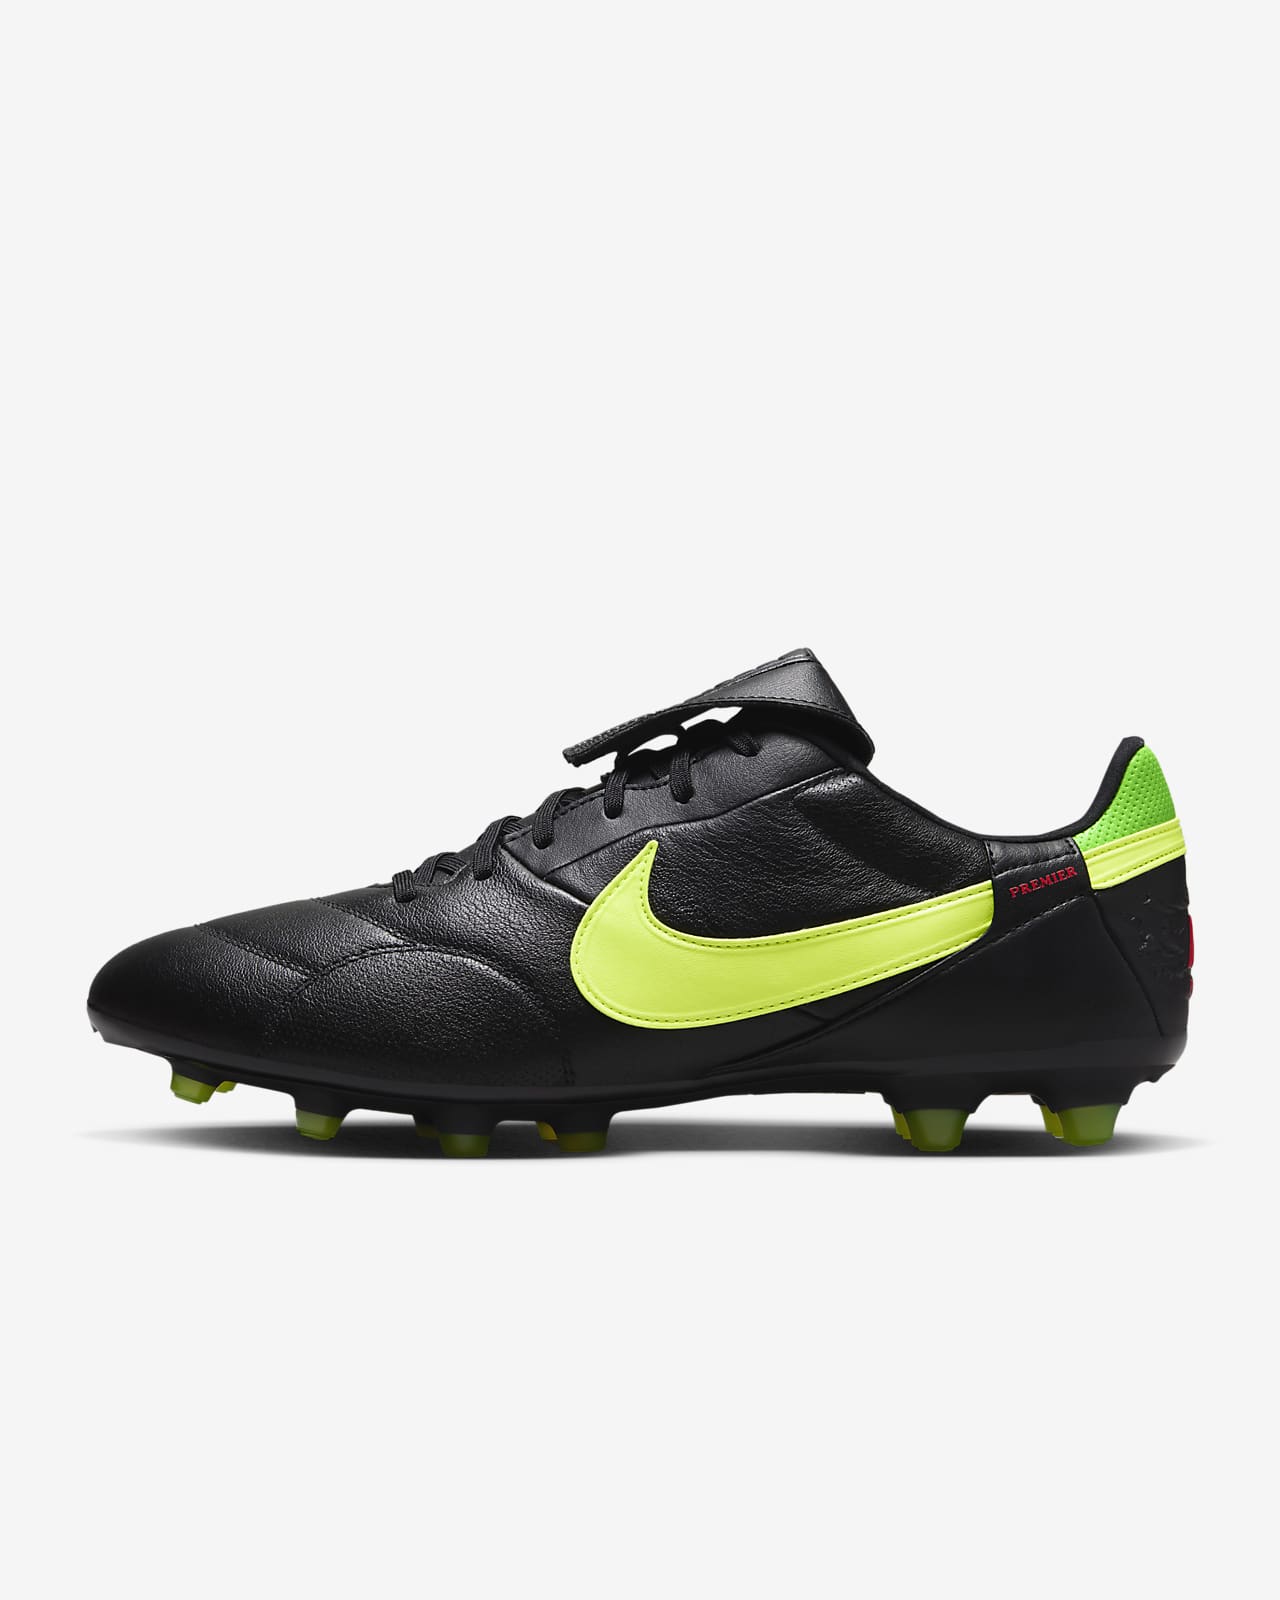 NikePremier 3 FG Low-Top Soccer Cleats